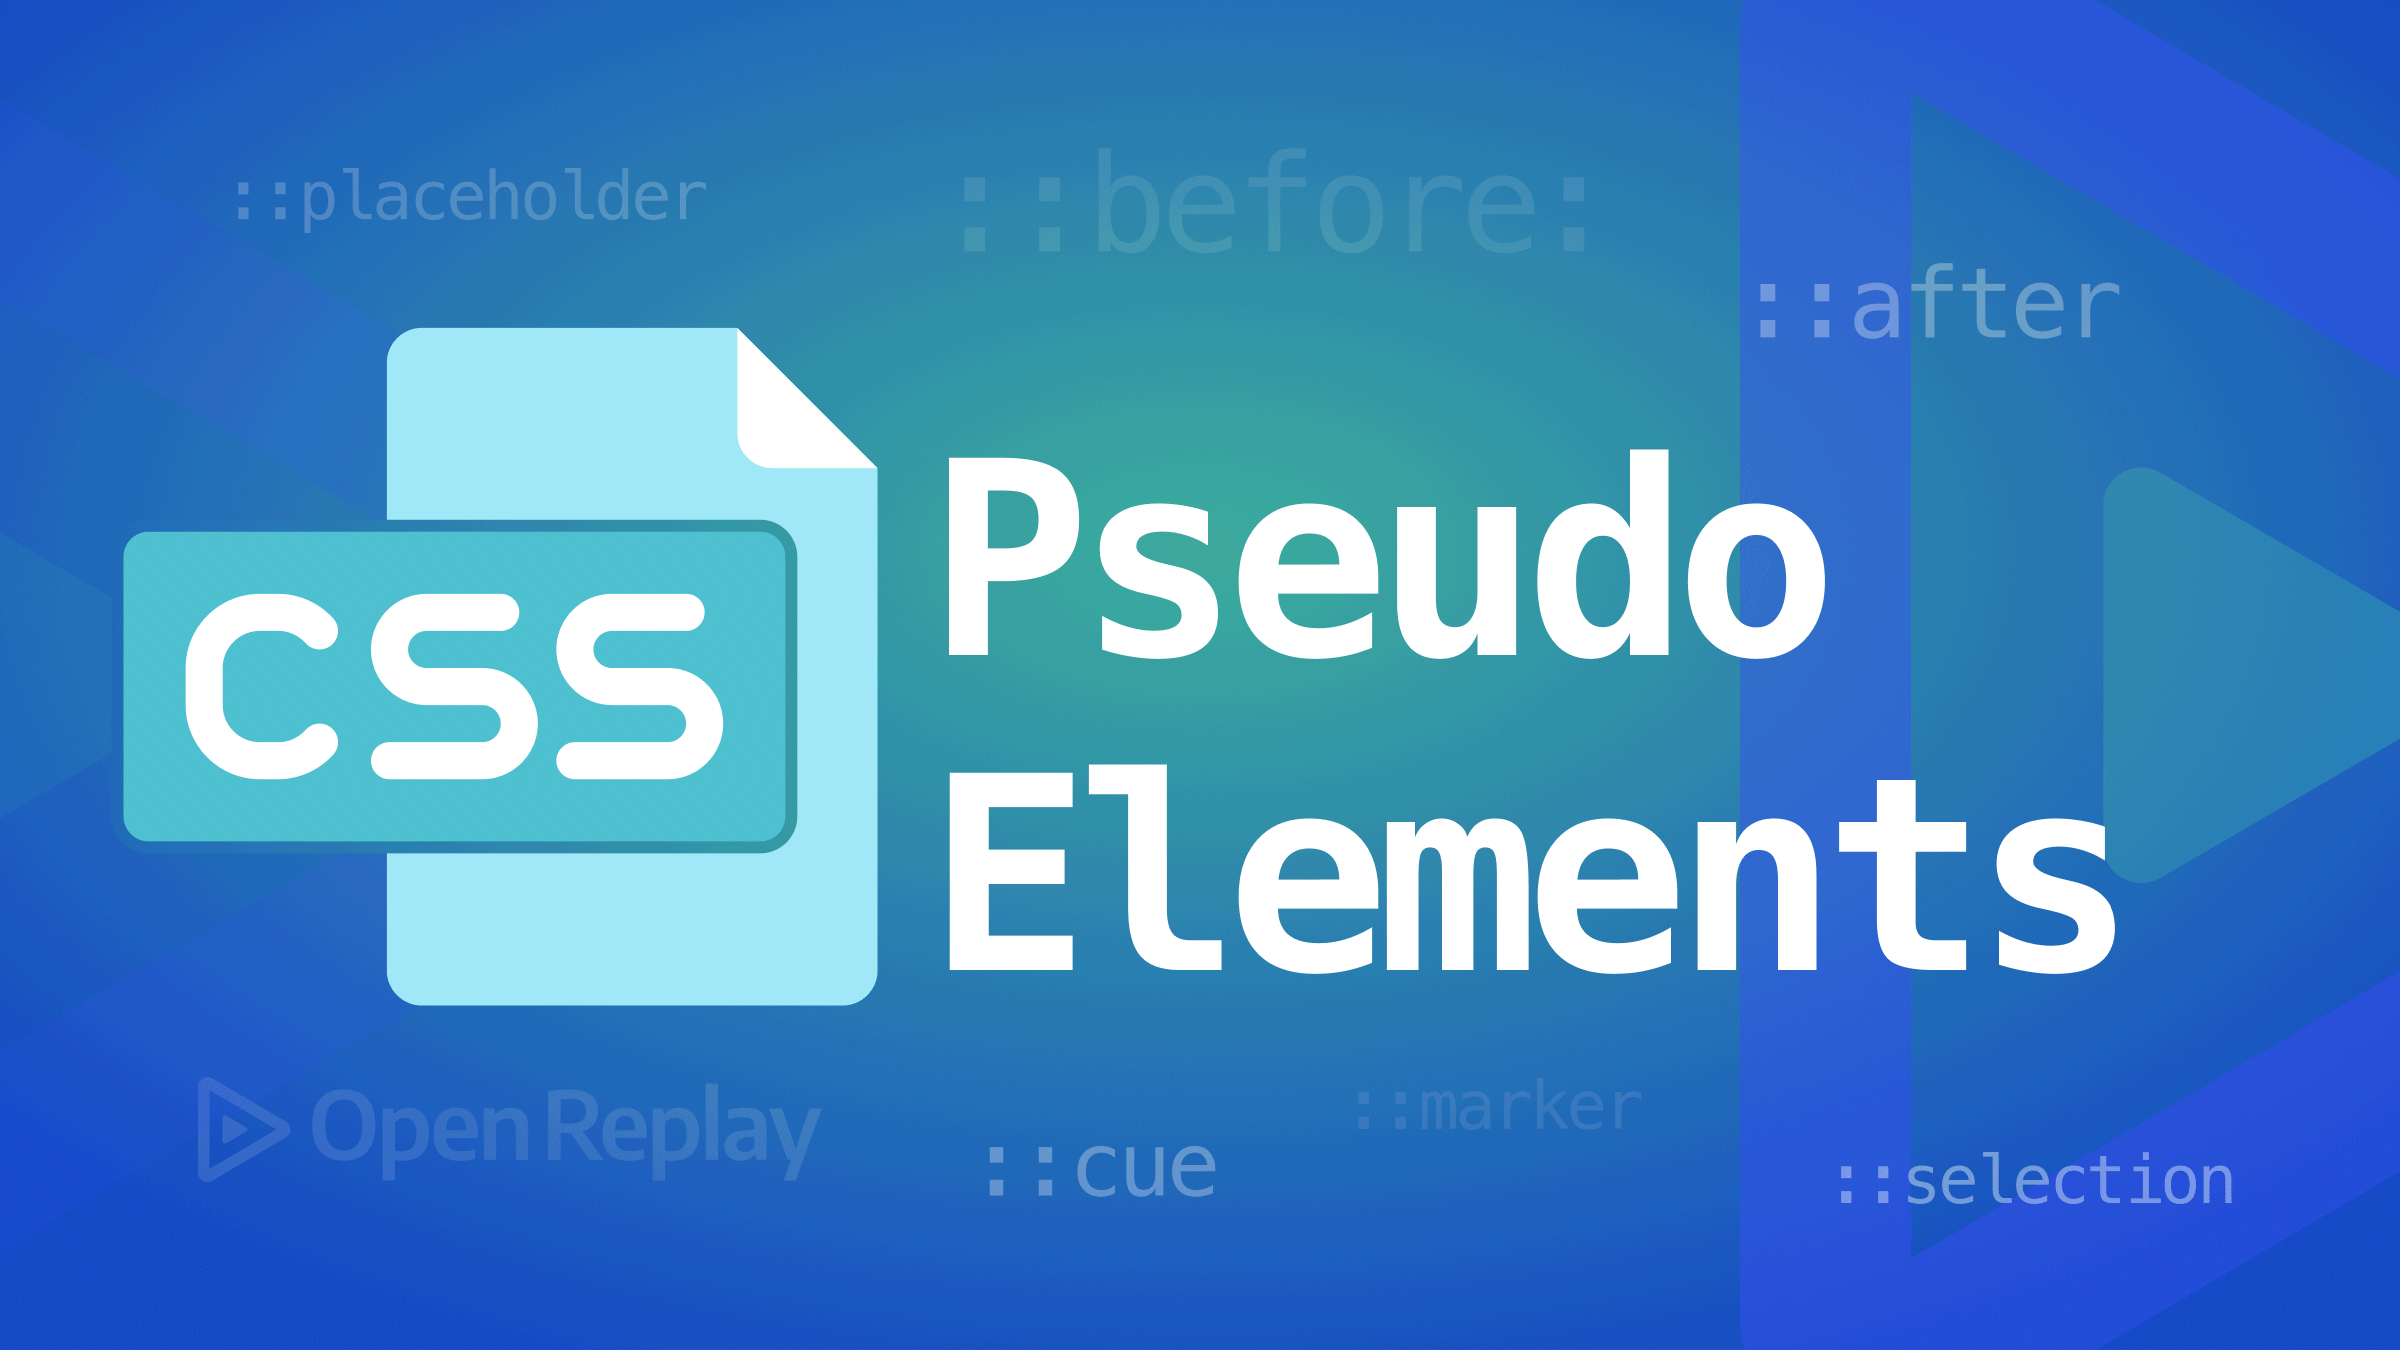 CSS Pseudo Elements: A Definite Guide